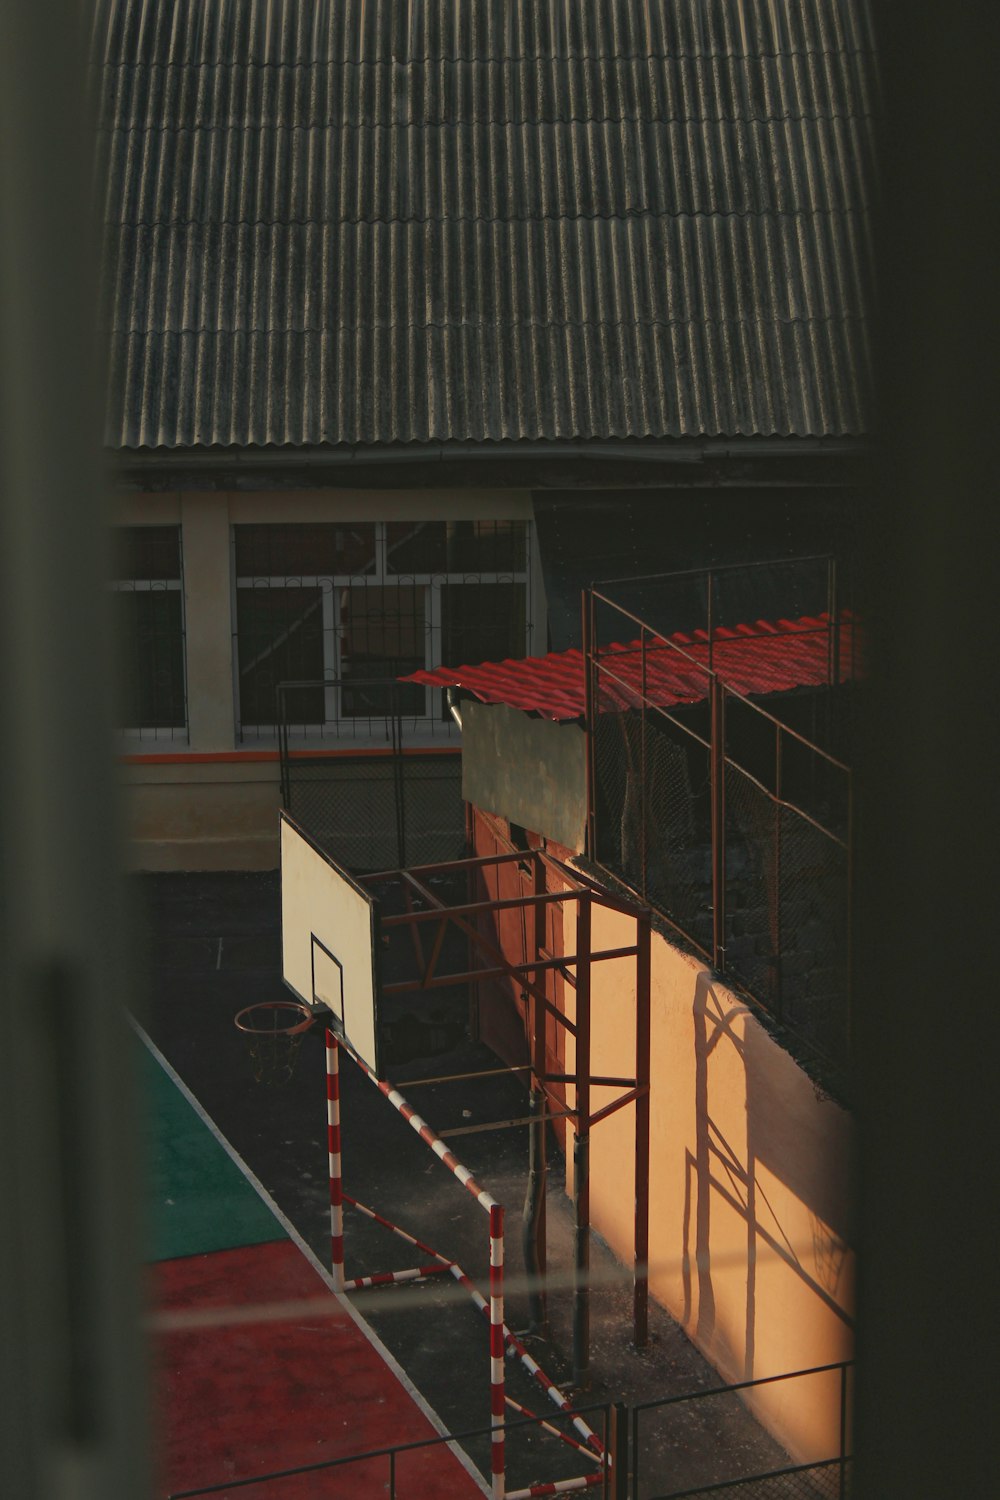 a view of a basketball court through a window